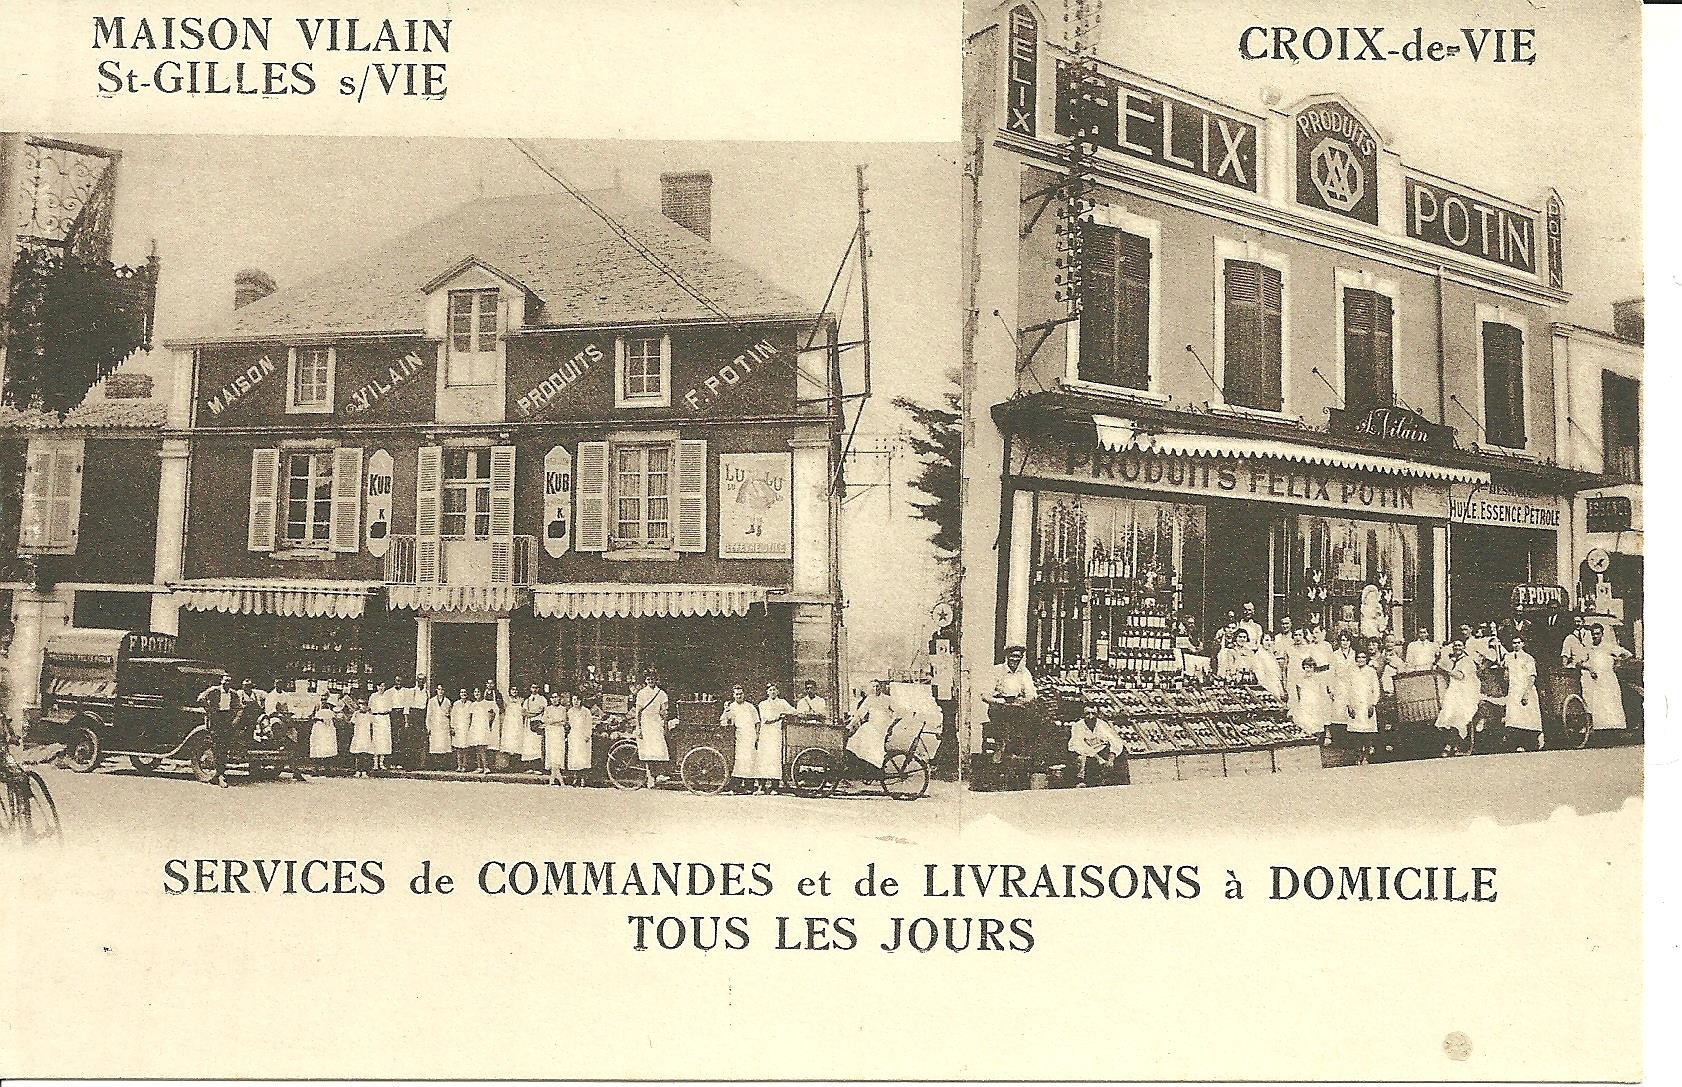 Deux magasins Félix Potin.